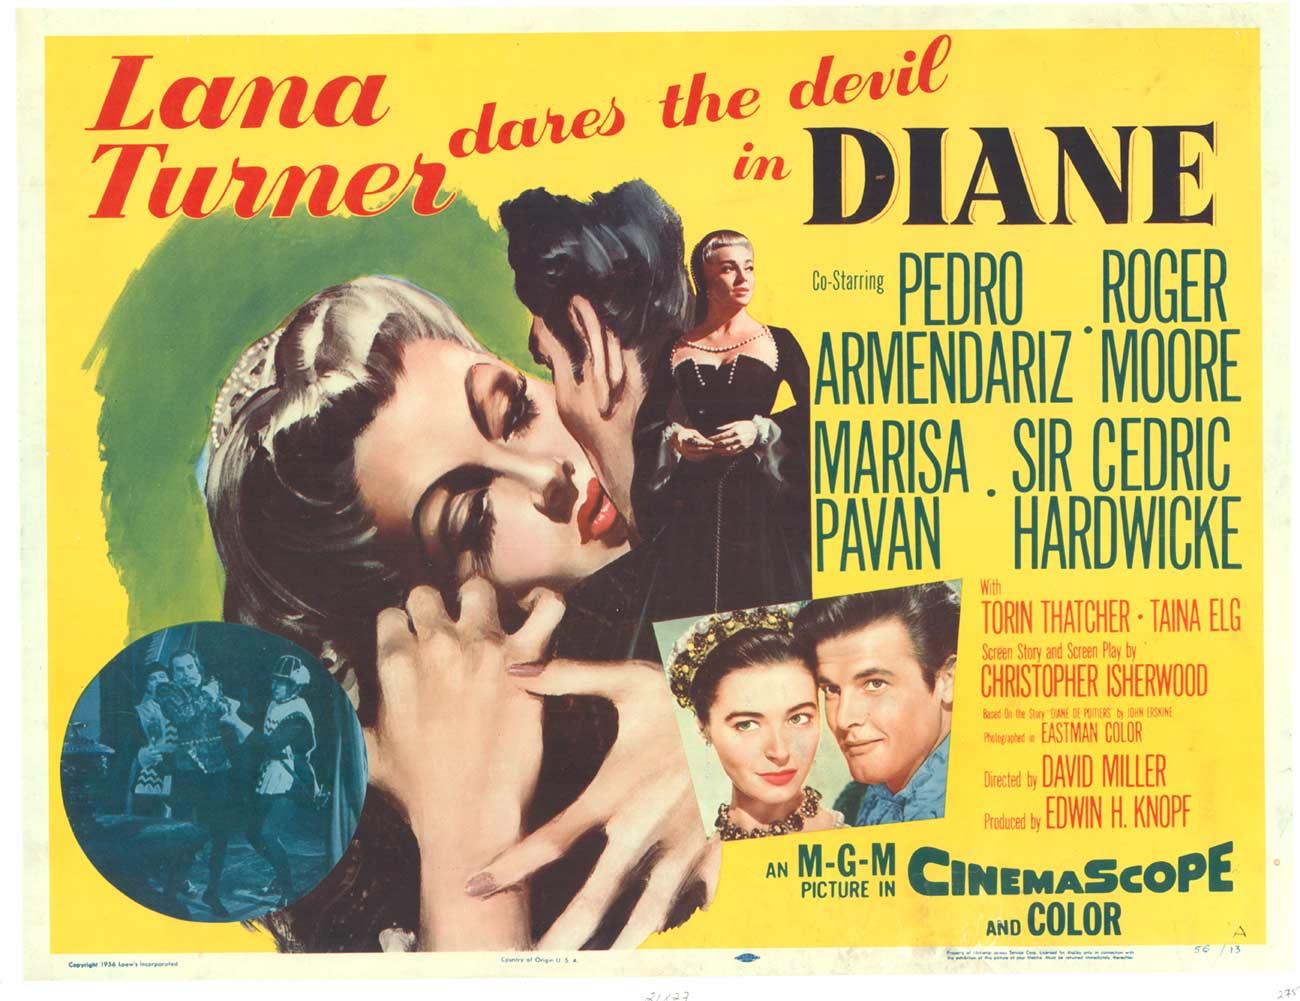 Unknown Print – Vintage-Filmplakat „Diane“ aus 1/2-Blatt  Lana Turner, Roger Moore, Lana